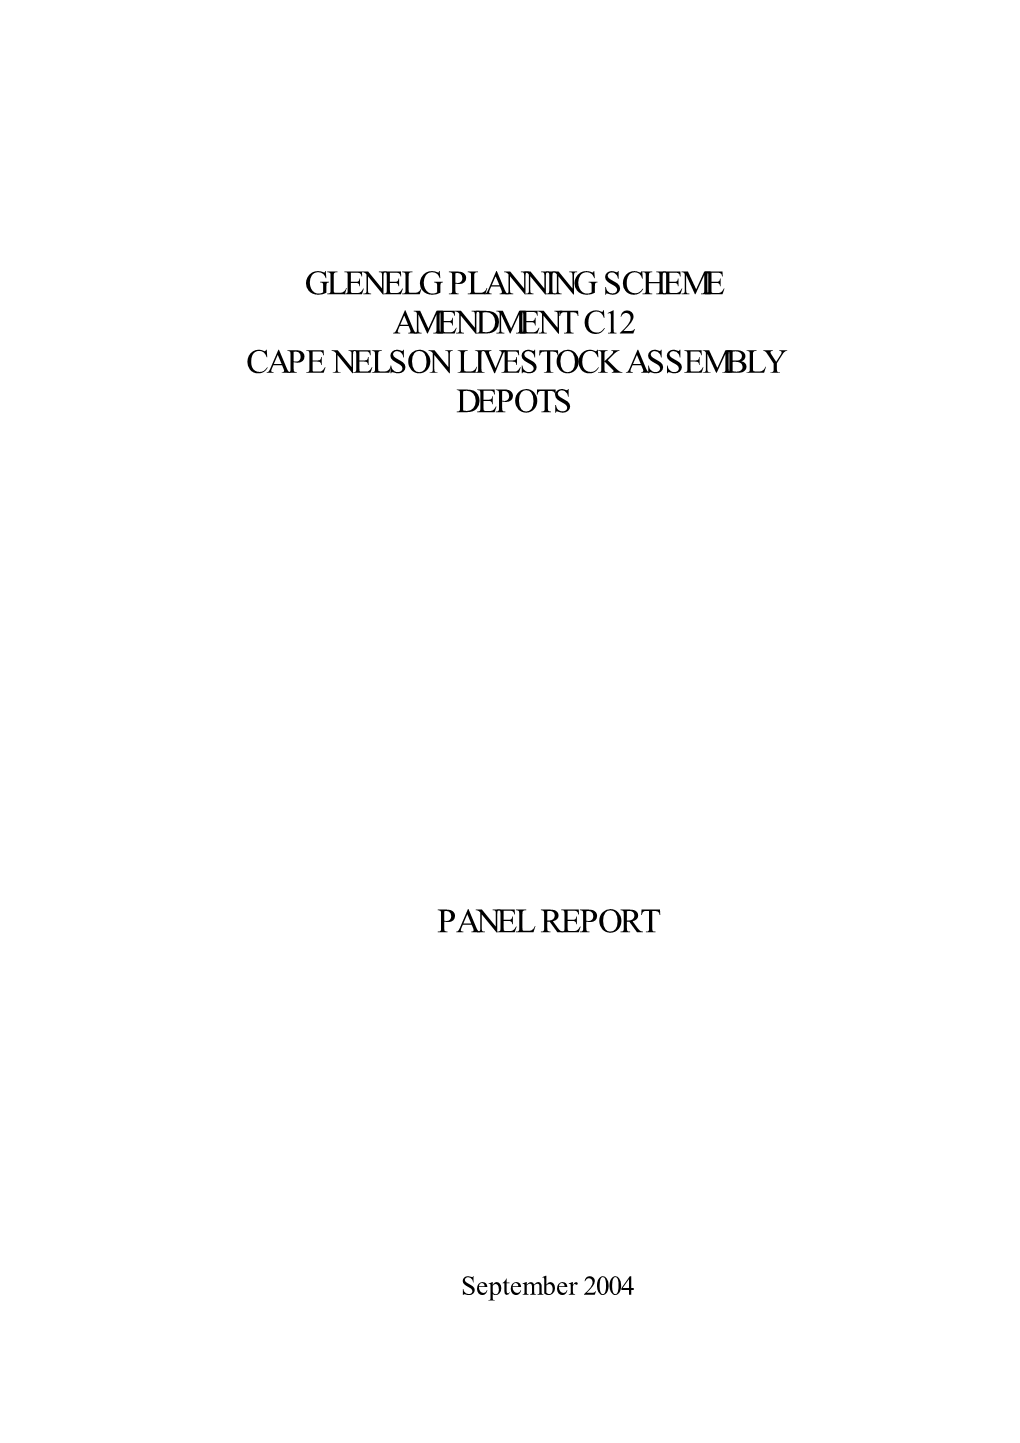 Panel Report Glenelg Planning Scheme